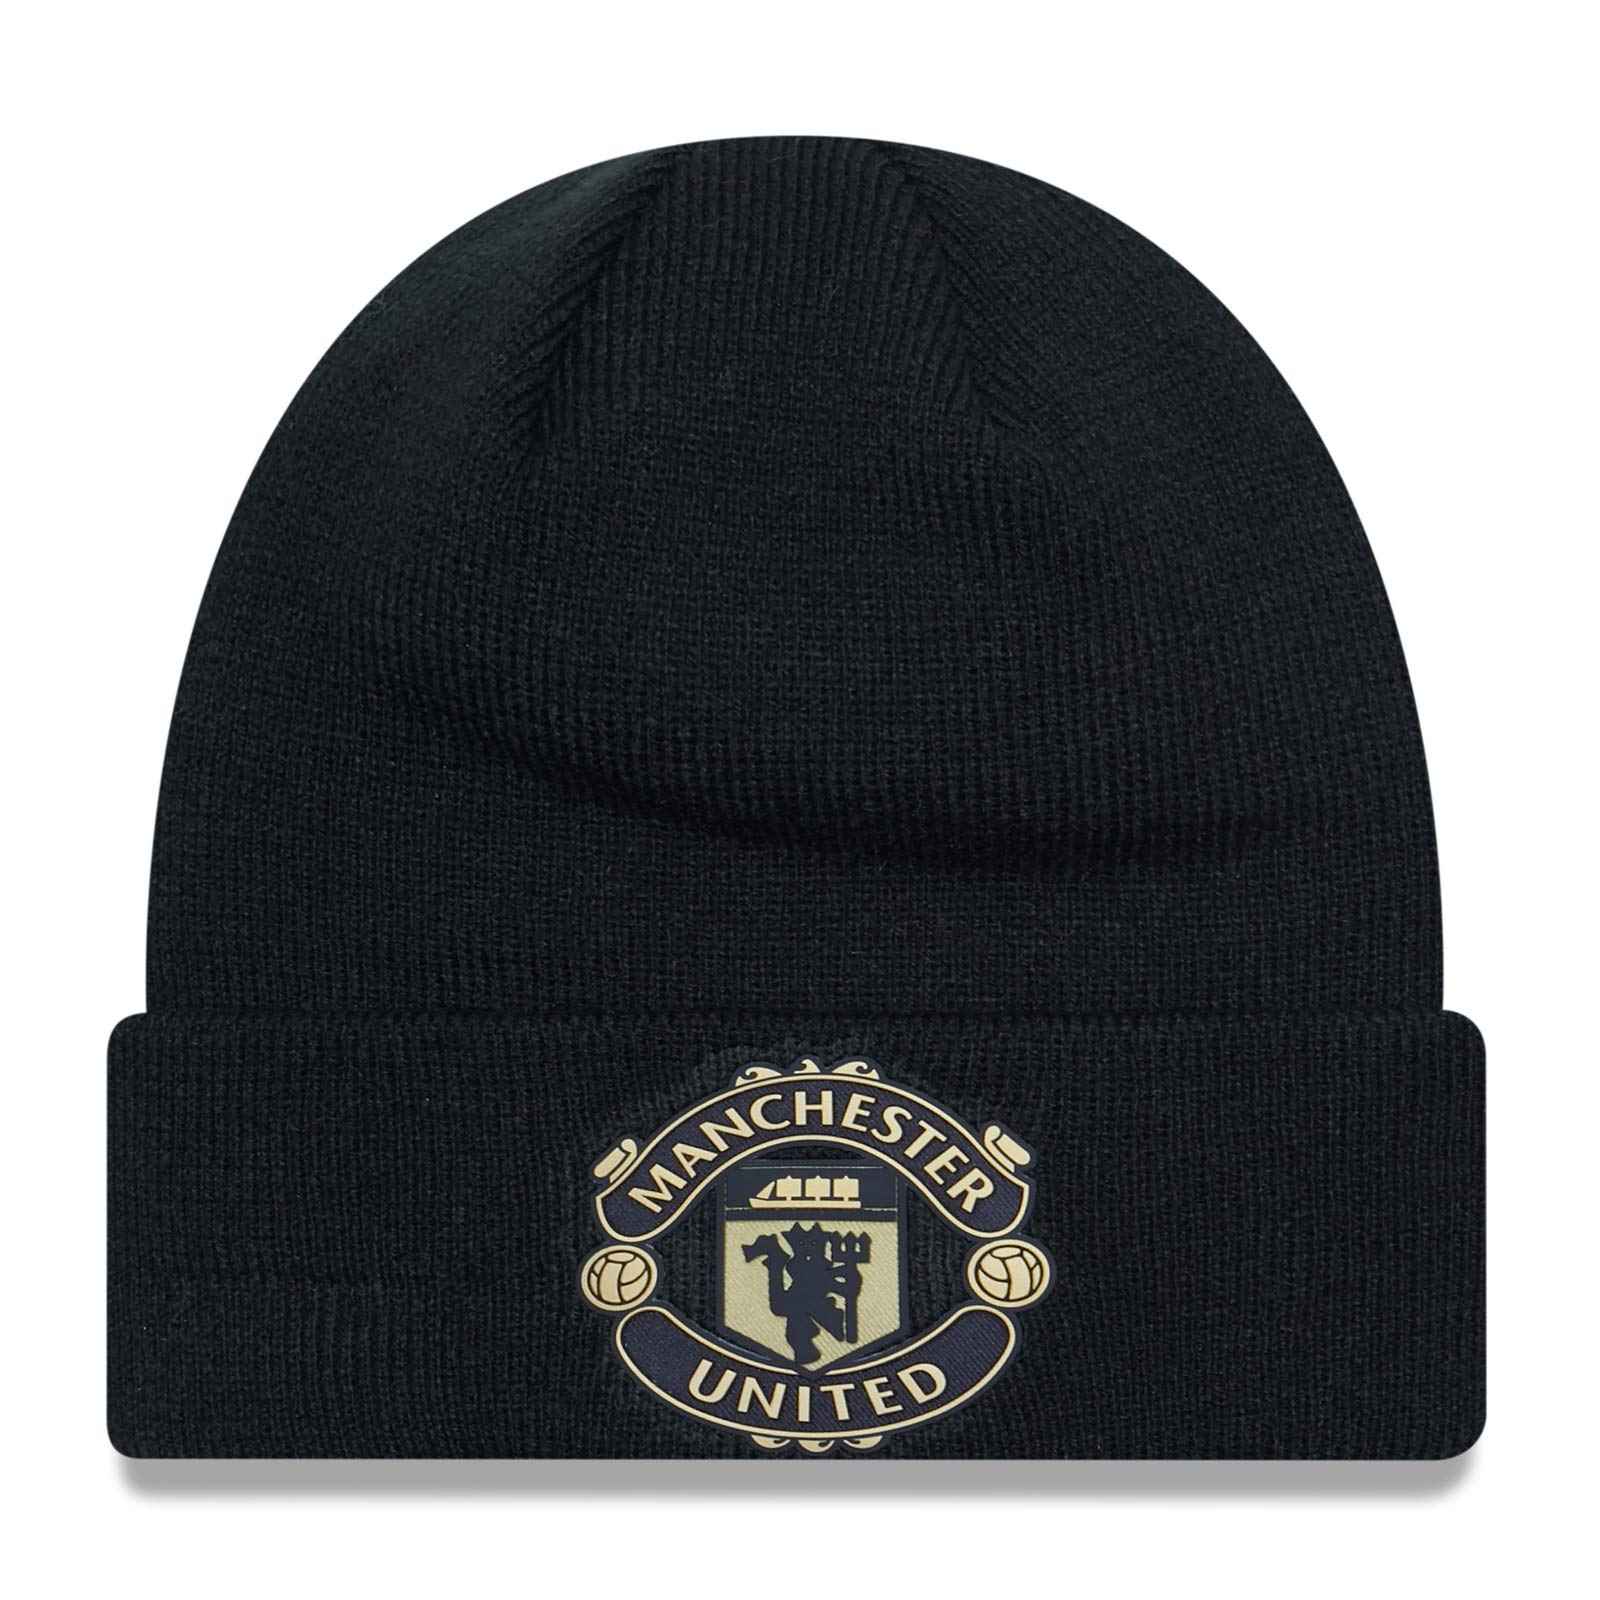 New Era Manchester United FC Cuff Knit Beanie